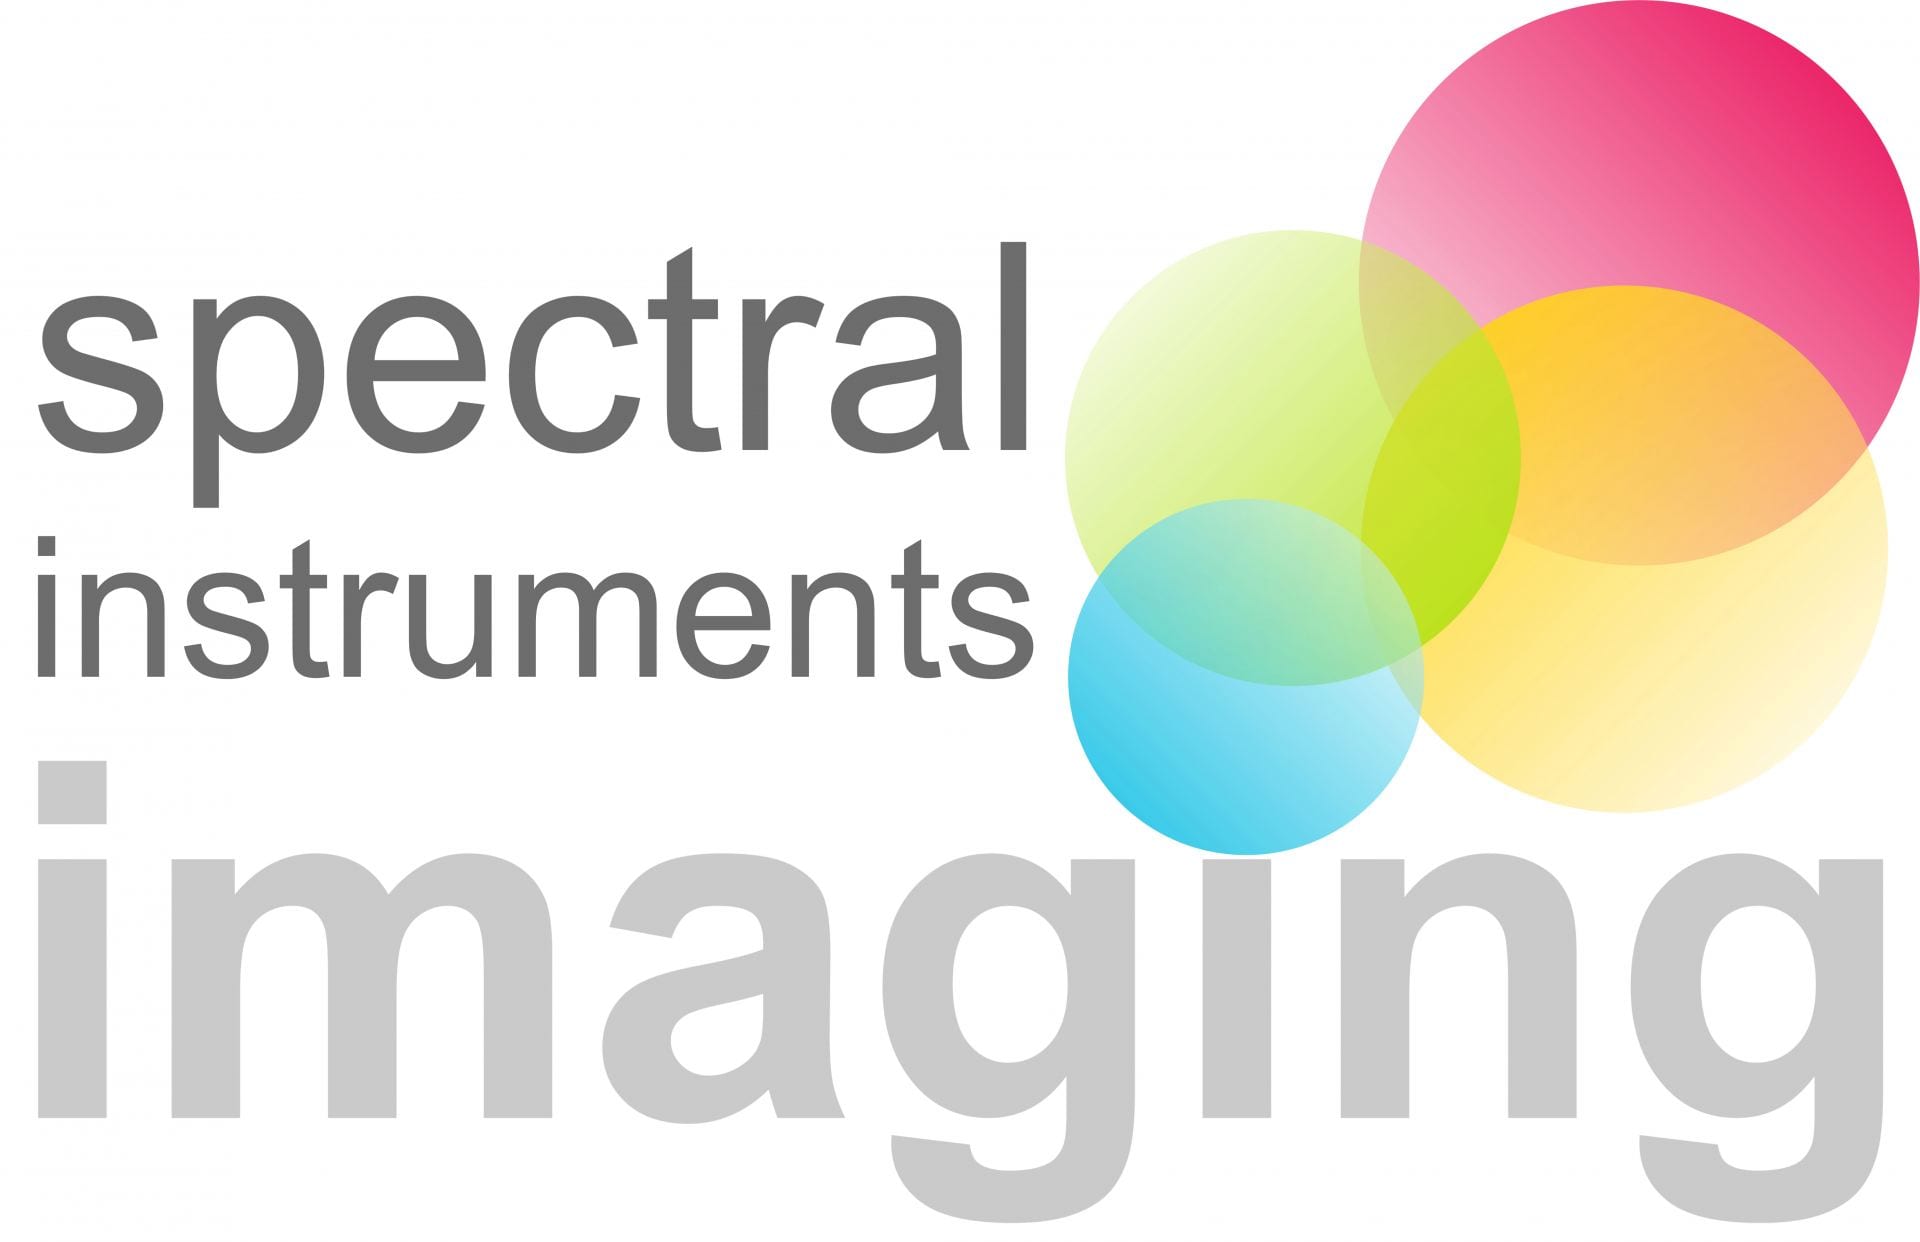 Spectral Imaging Logo